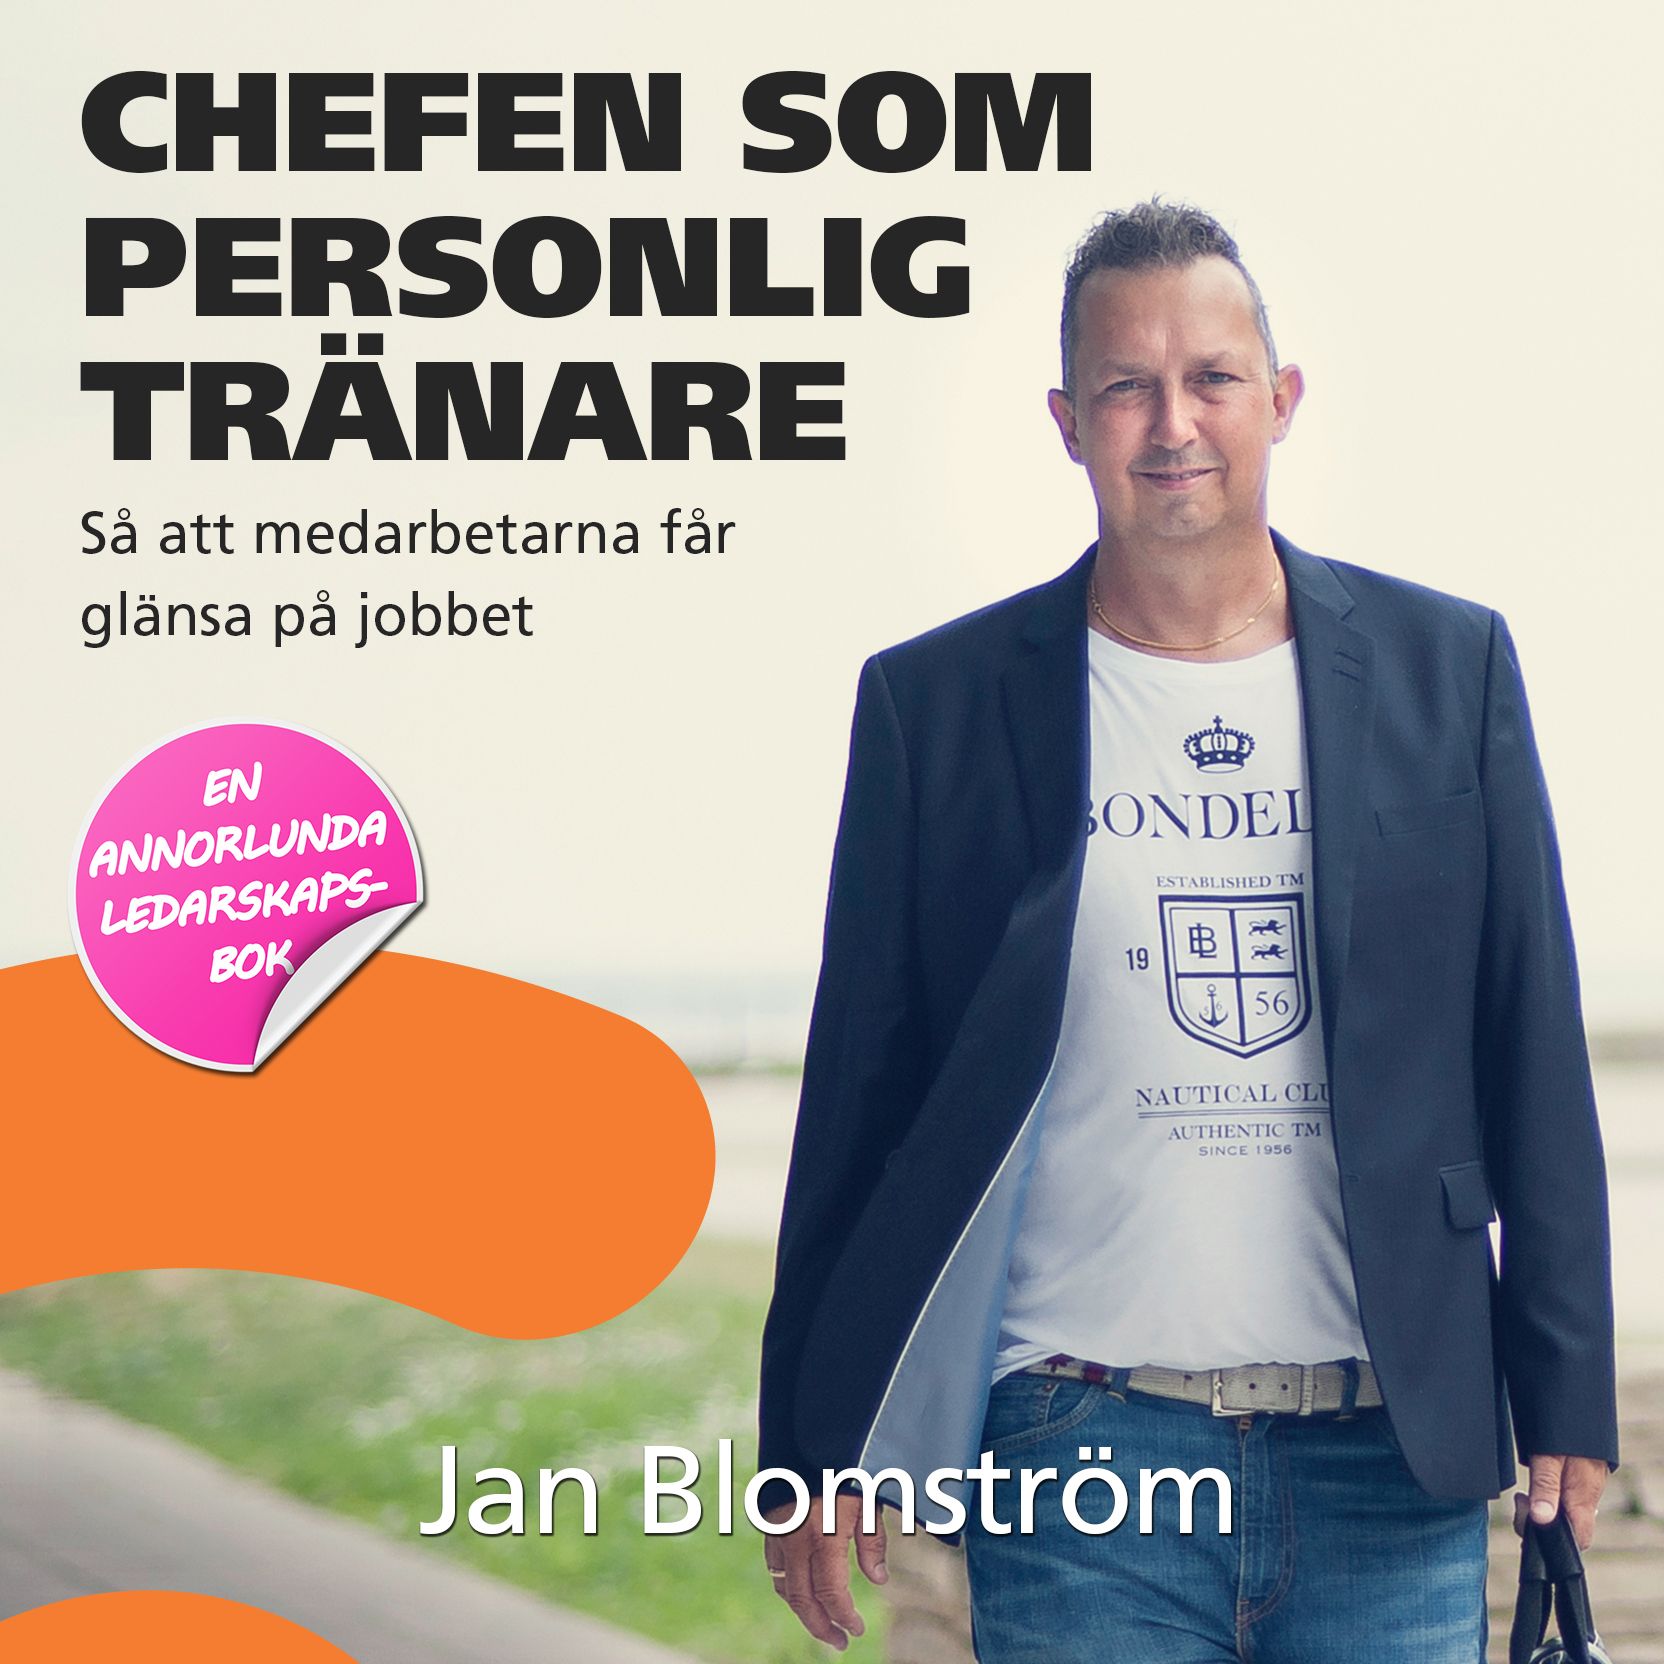 Chefen som personlig tränare, audiobook by Jan Blomström